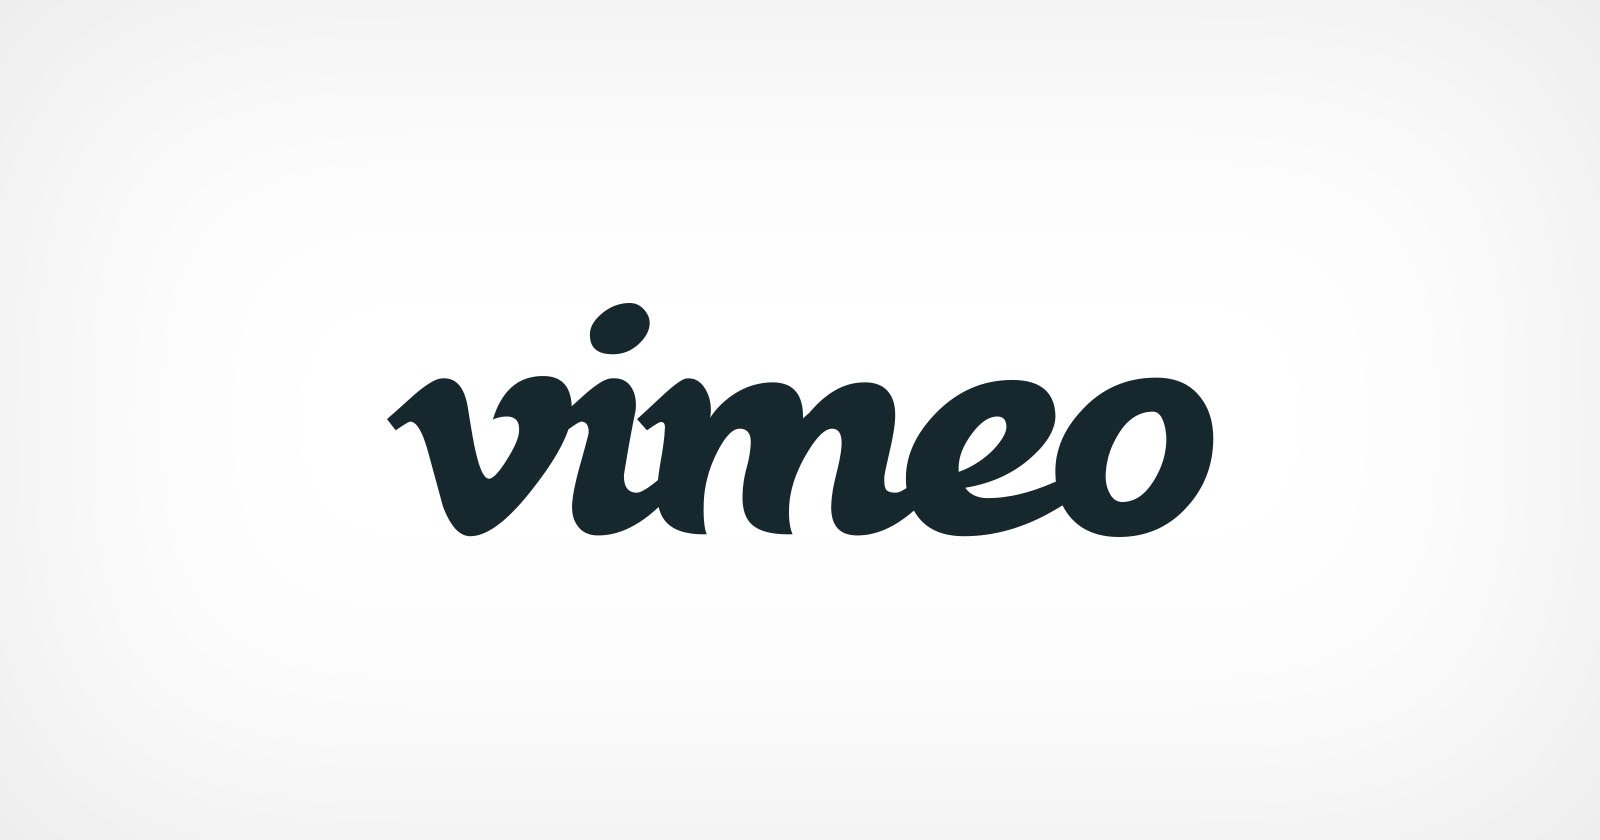  vimeo ai-powered editor promises simplify video creation 